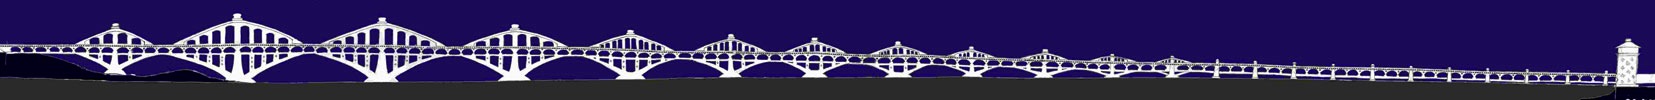 Proposed design for the San Francisco Bay Bridge